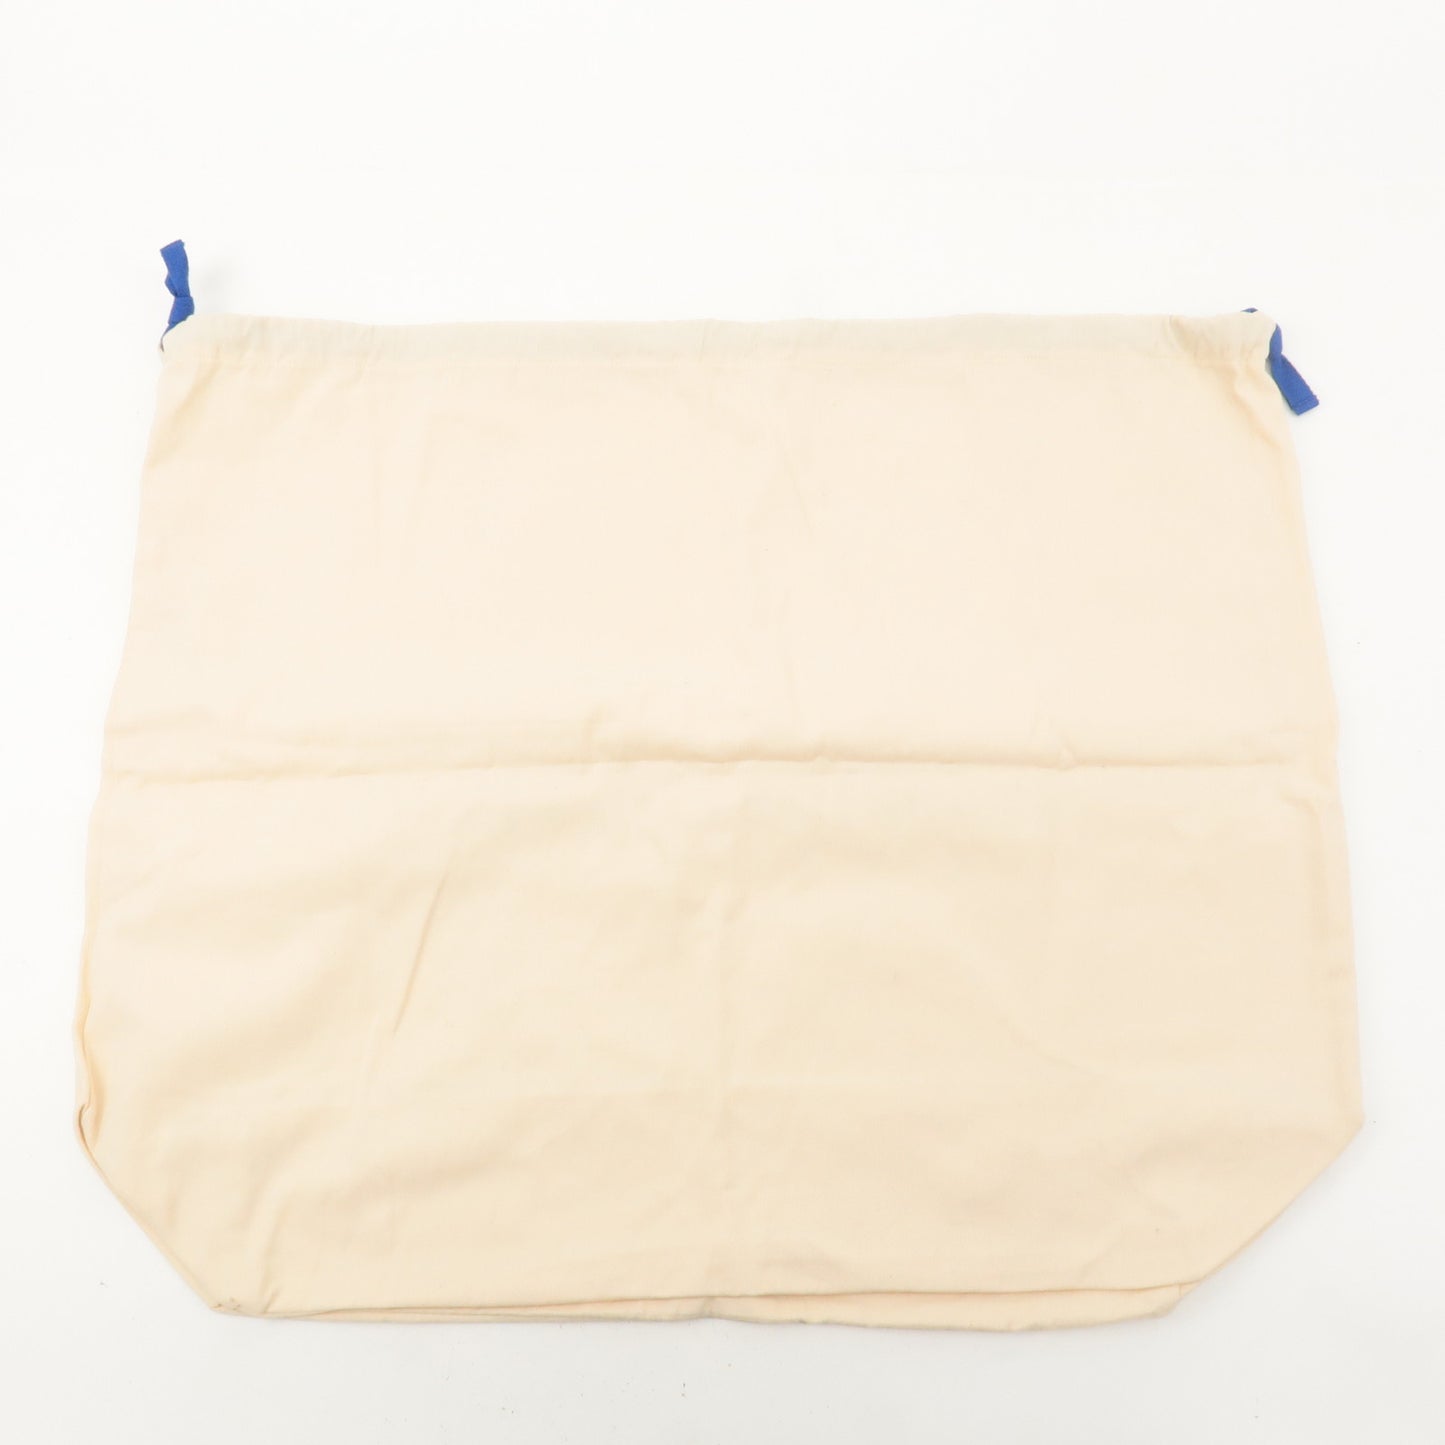 Louis Vuitton Set of 10 Dust Bag Storage Bag New Style Beige